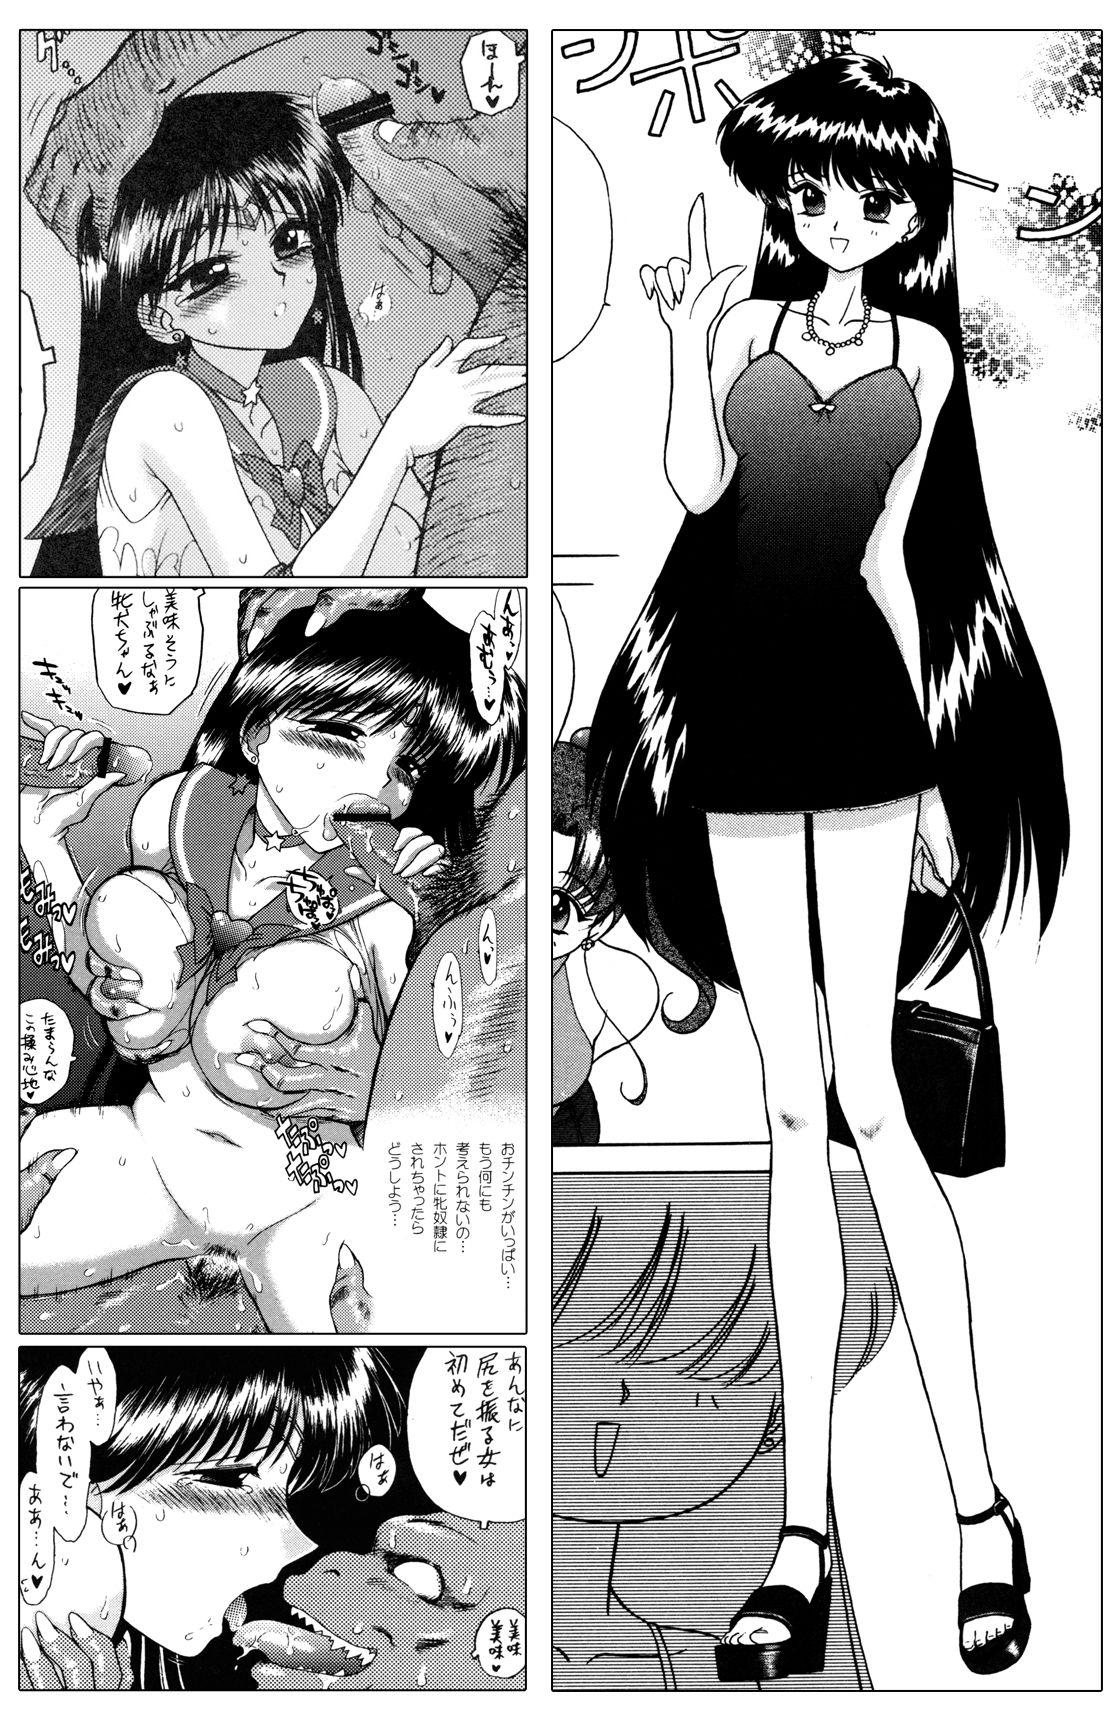 Putas QUEEN OF SPADES - 黑桃皇后 - Sailor moon Hindi - Page 12